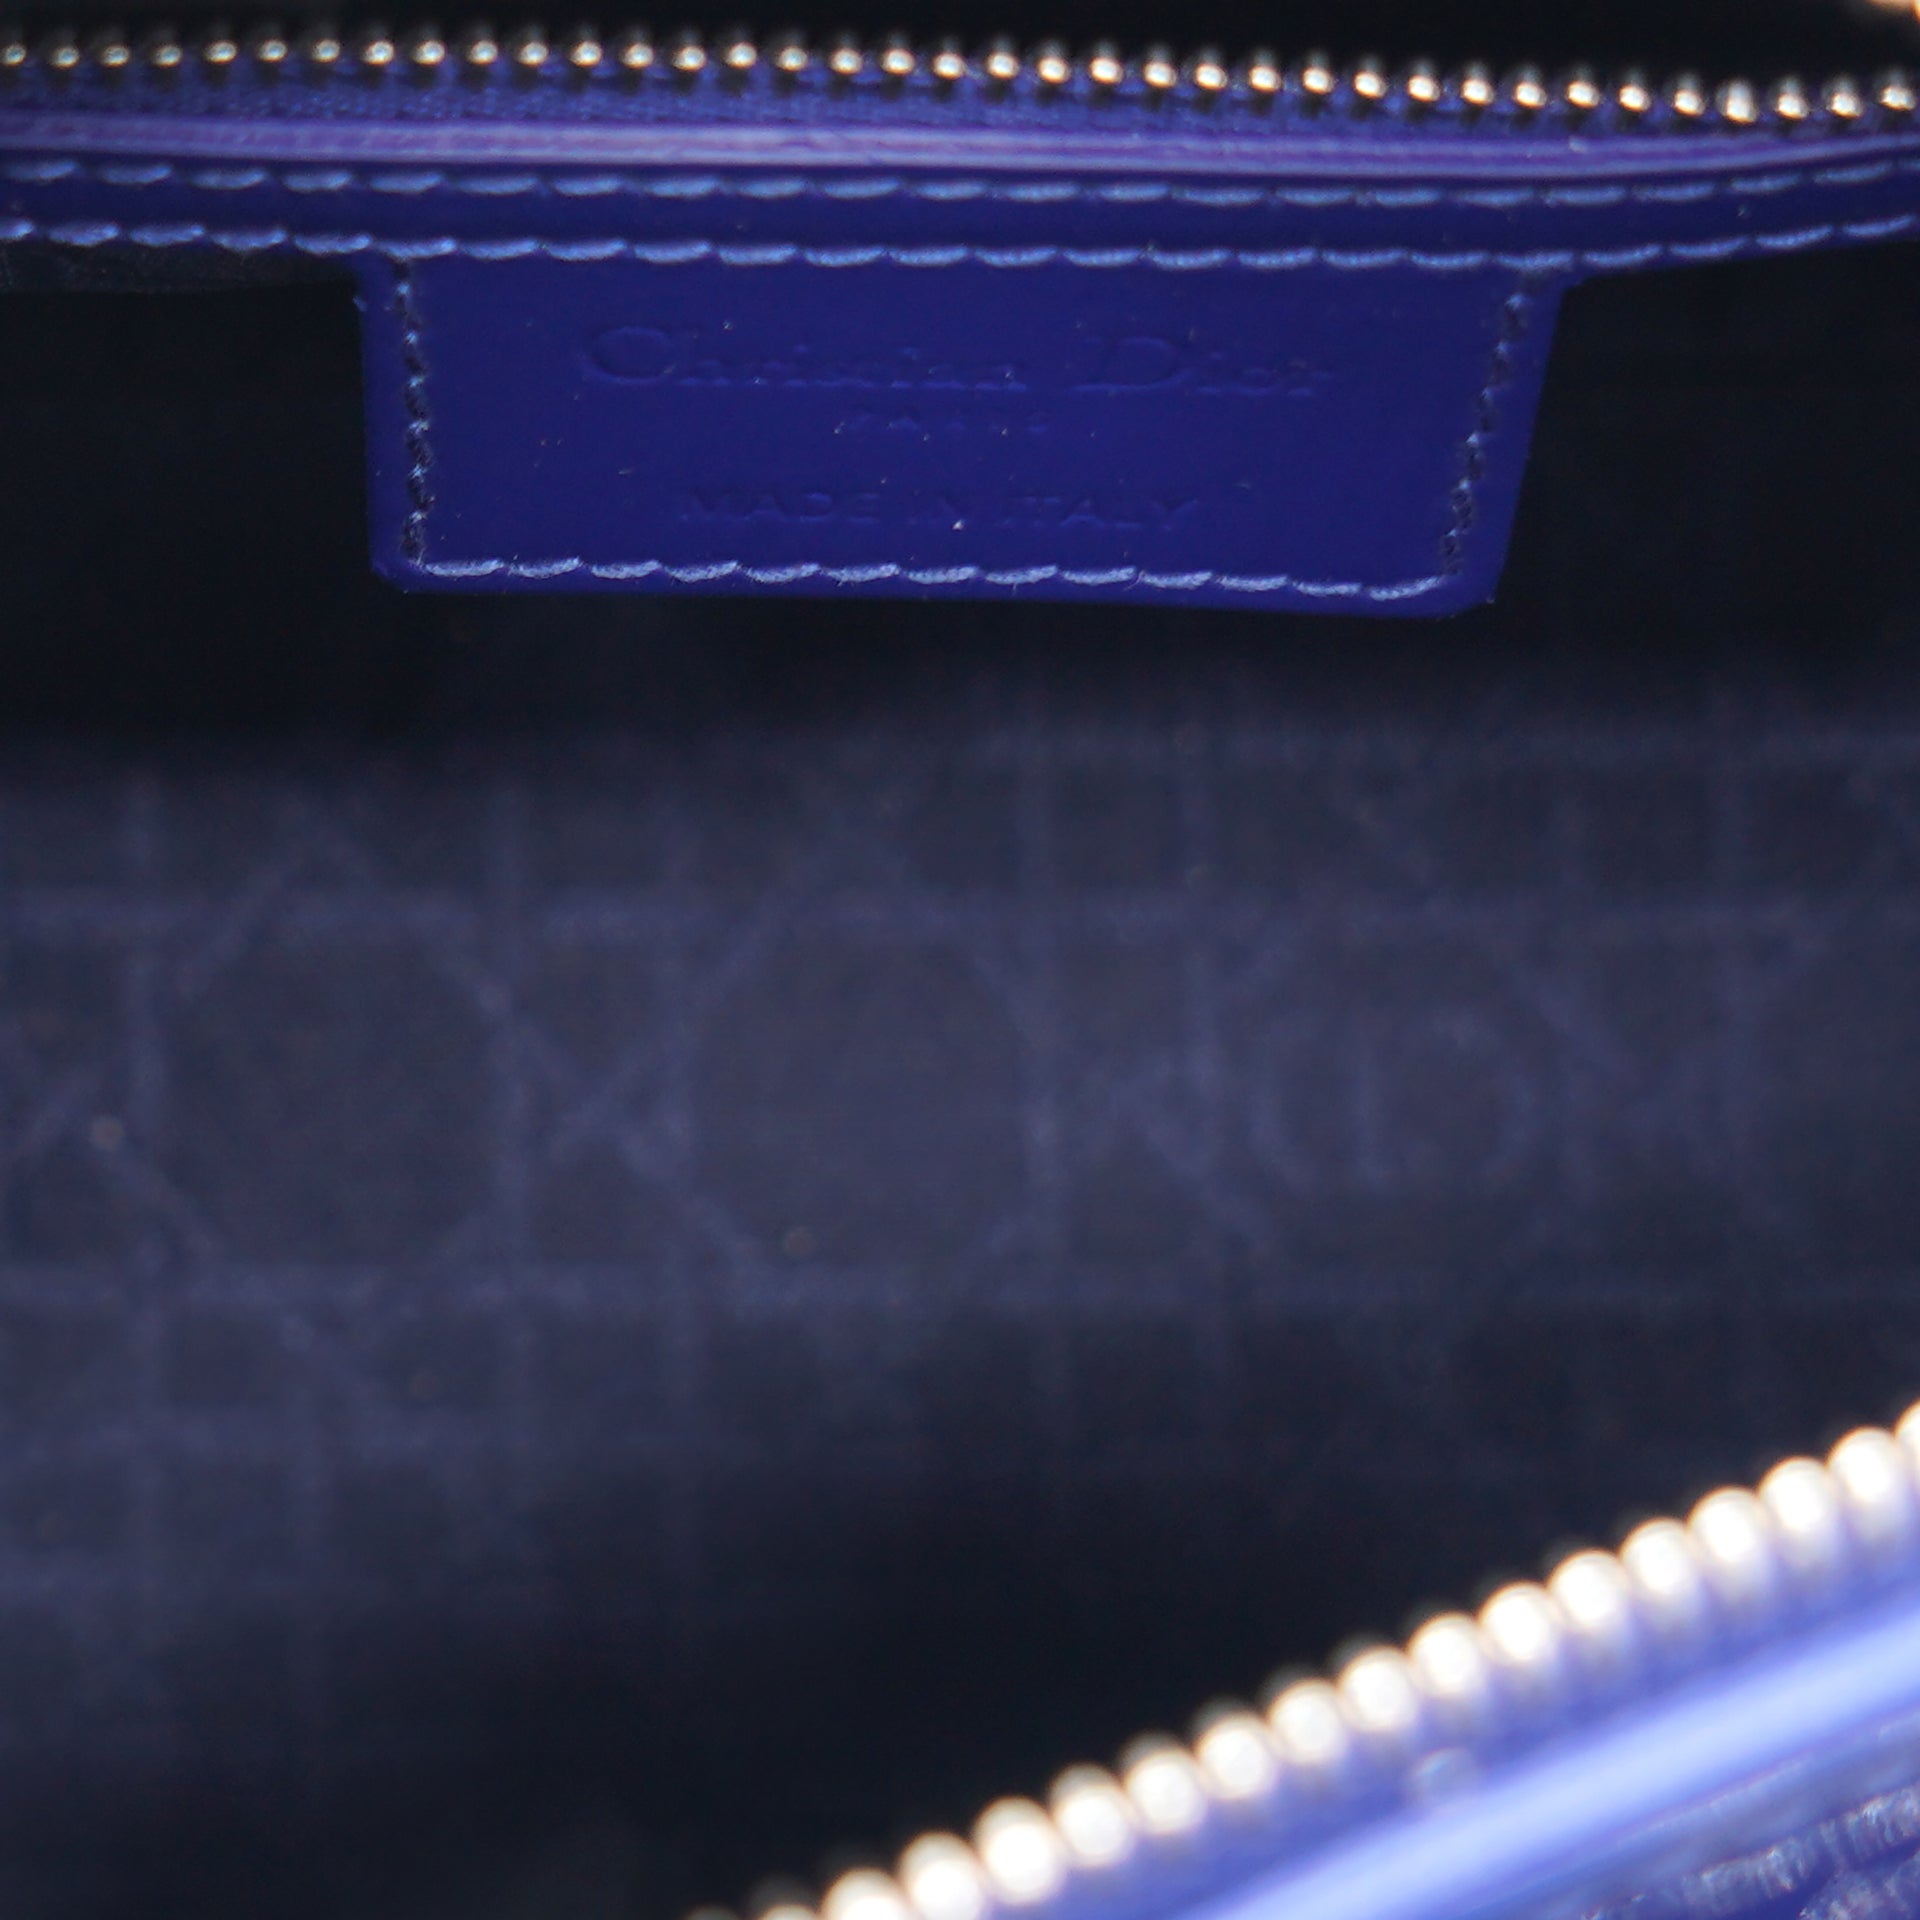 Lady Dior Medium Blue Patent Bag